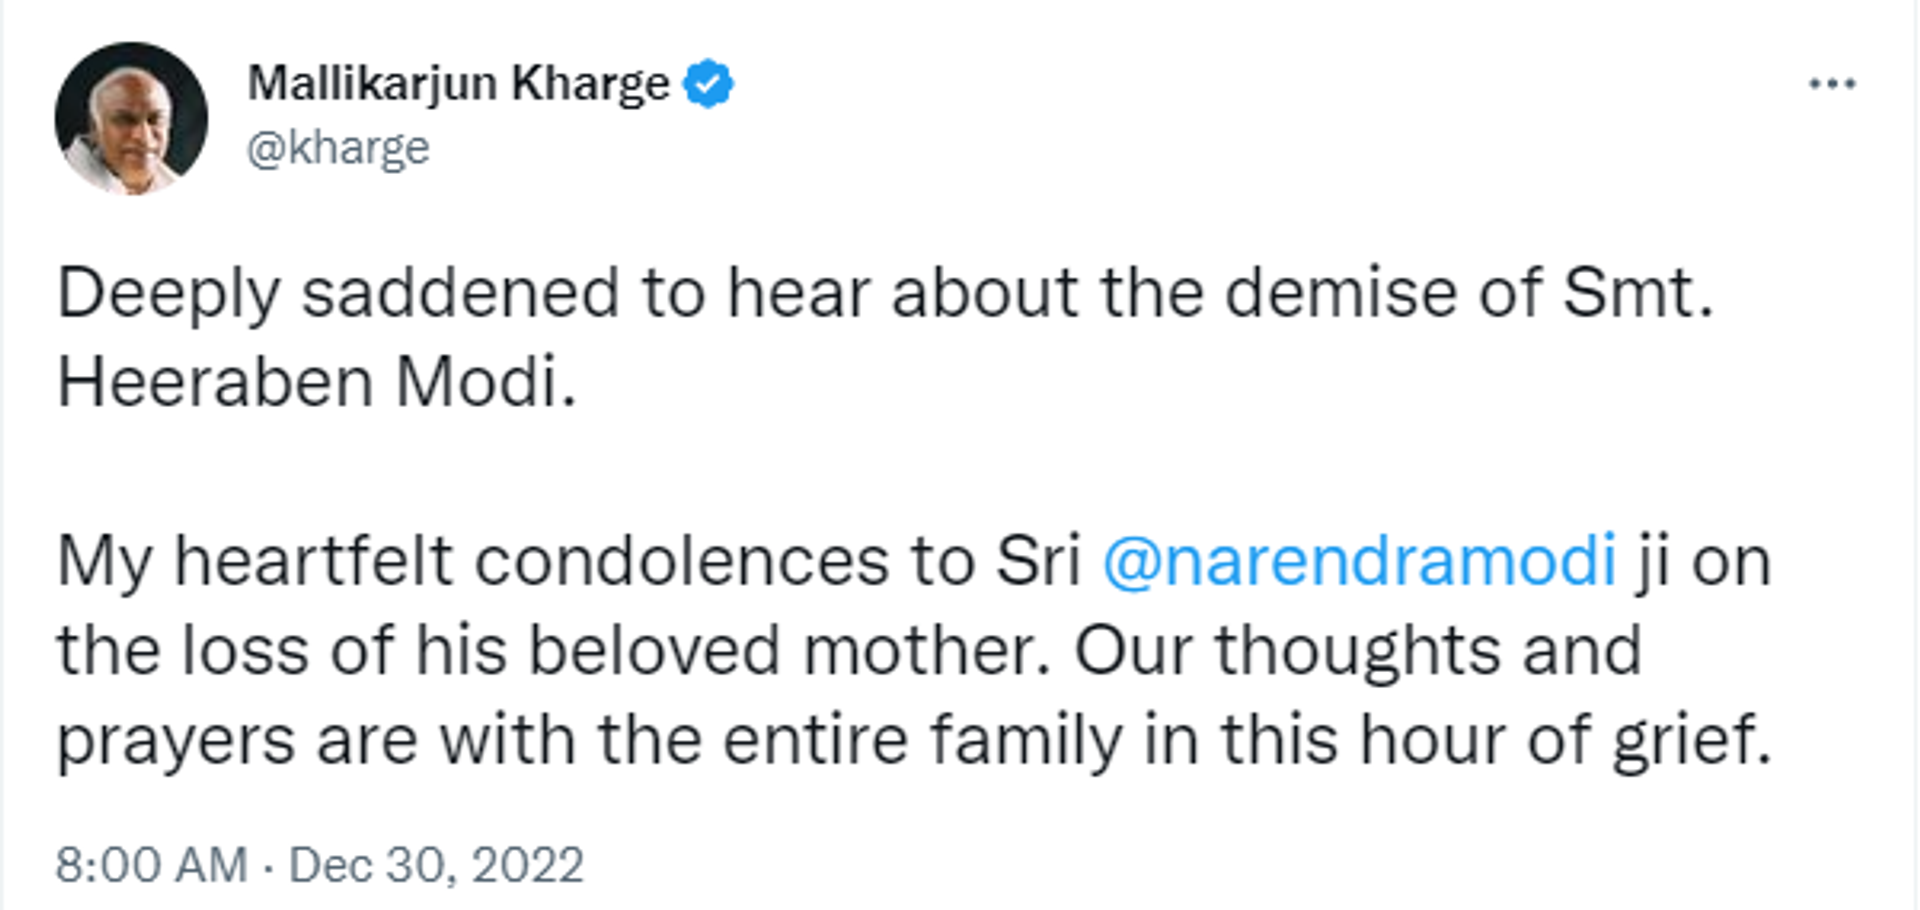 Congress Chief Mallikarjun Kharge Condoled Death of PM Modi's Mother - Sputnik India, 1920, 30.12.2022